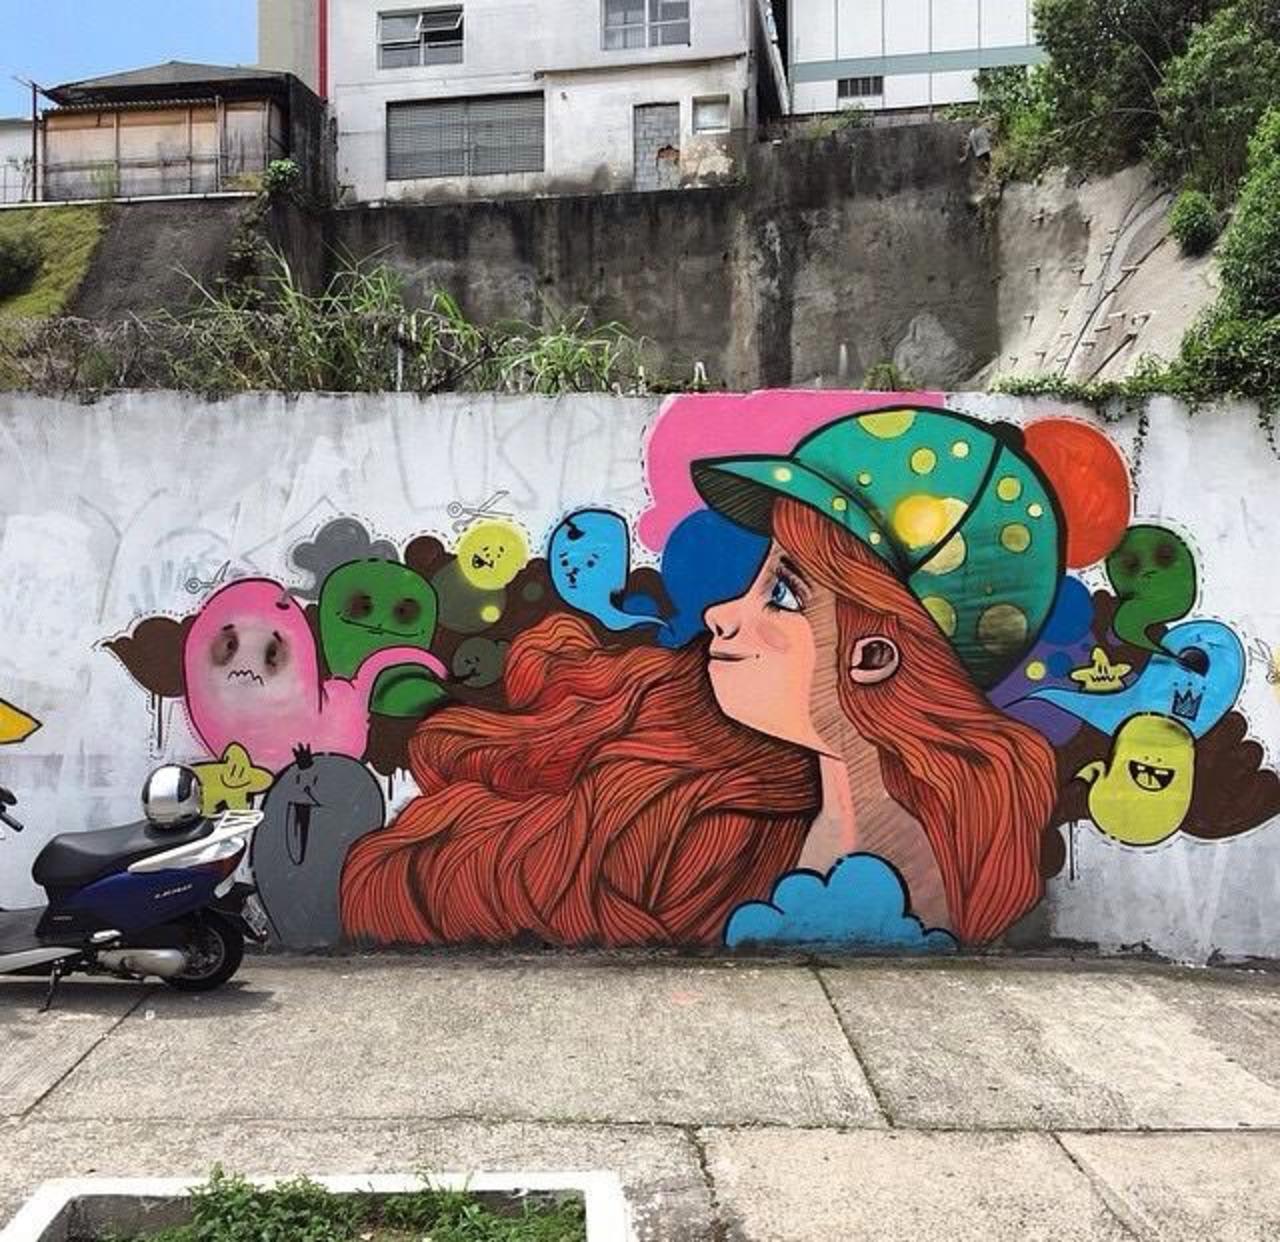 Endearing Street Art by Vupulos in São Paulo, Brazil 

#art #mural #graffiti #streetart http://t.co/YGsFuDC6iz